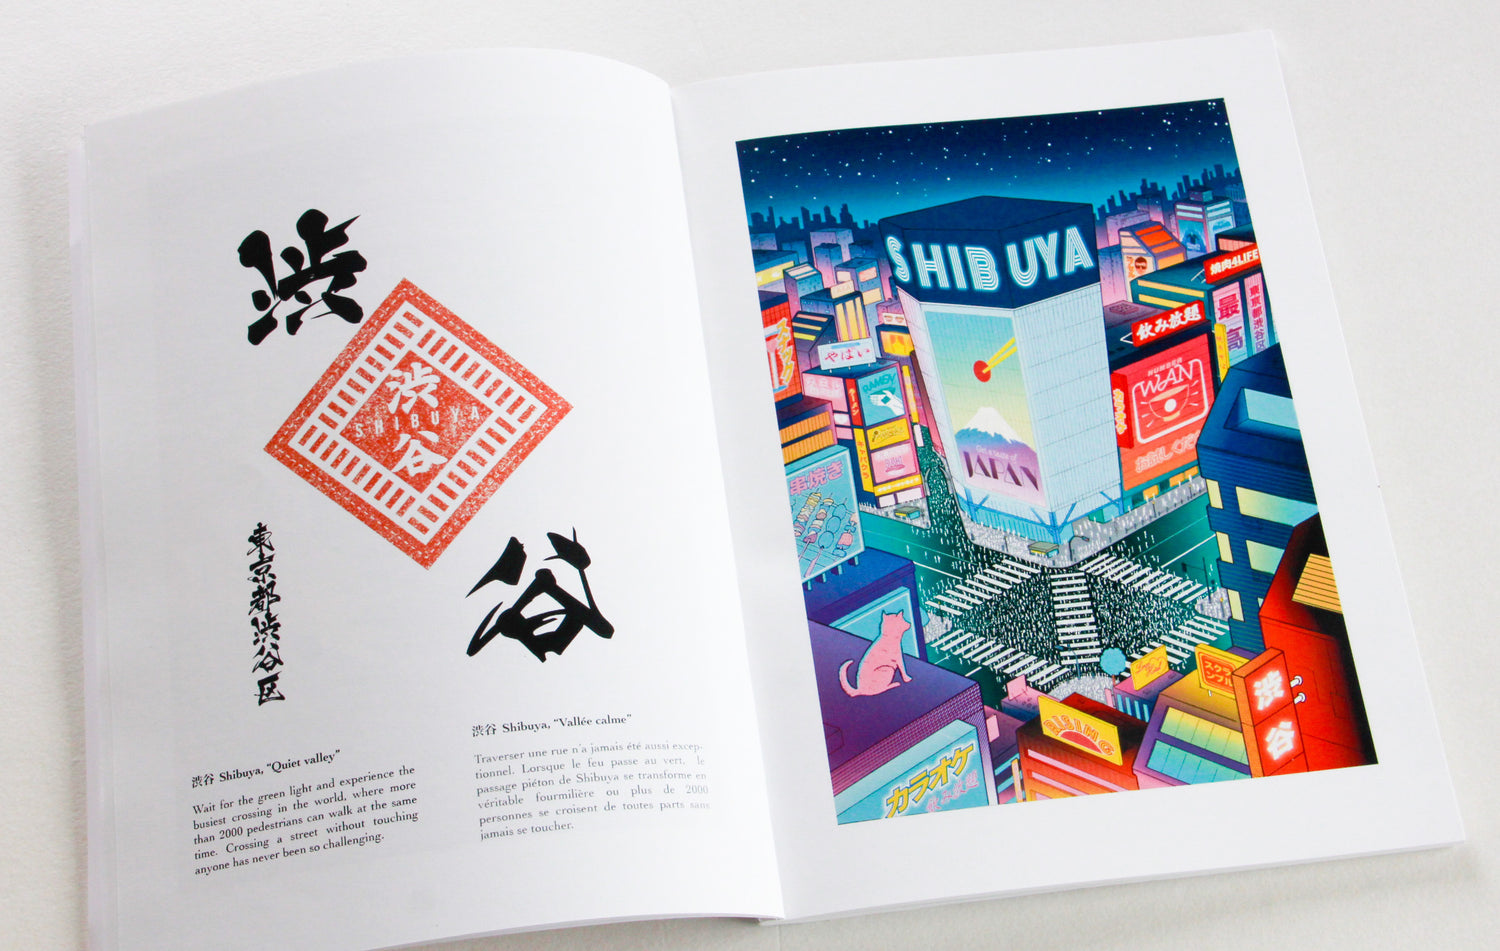 Bon Voyage Japan, a journey in travel posters by Jean — Kickstarter